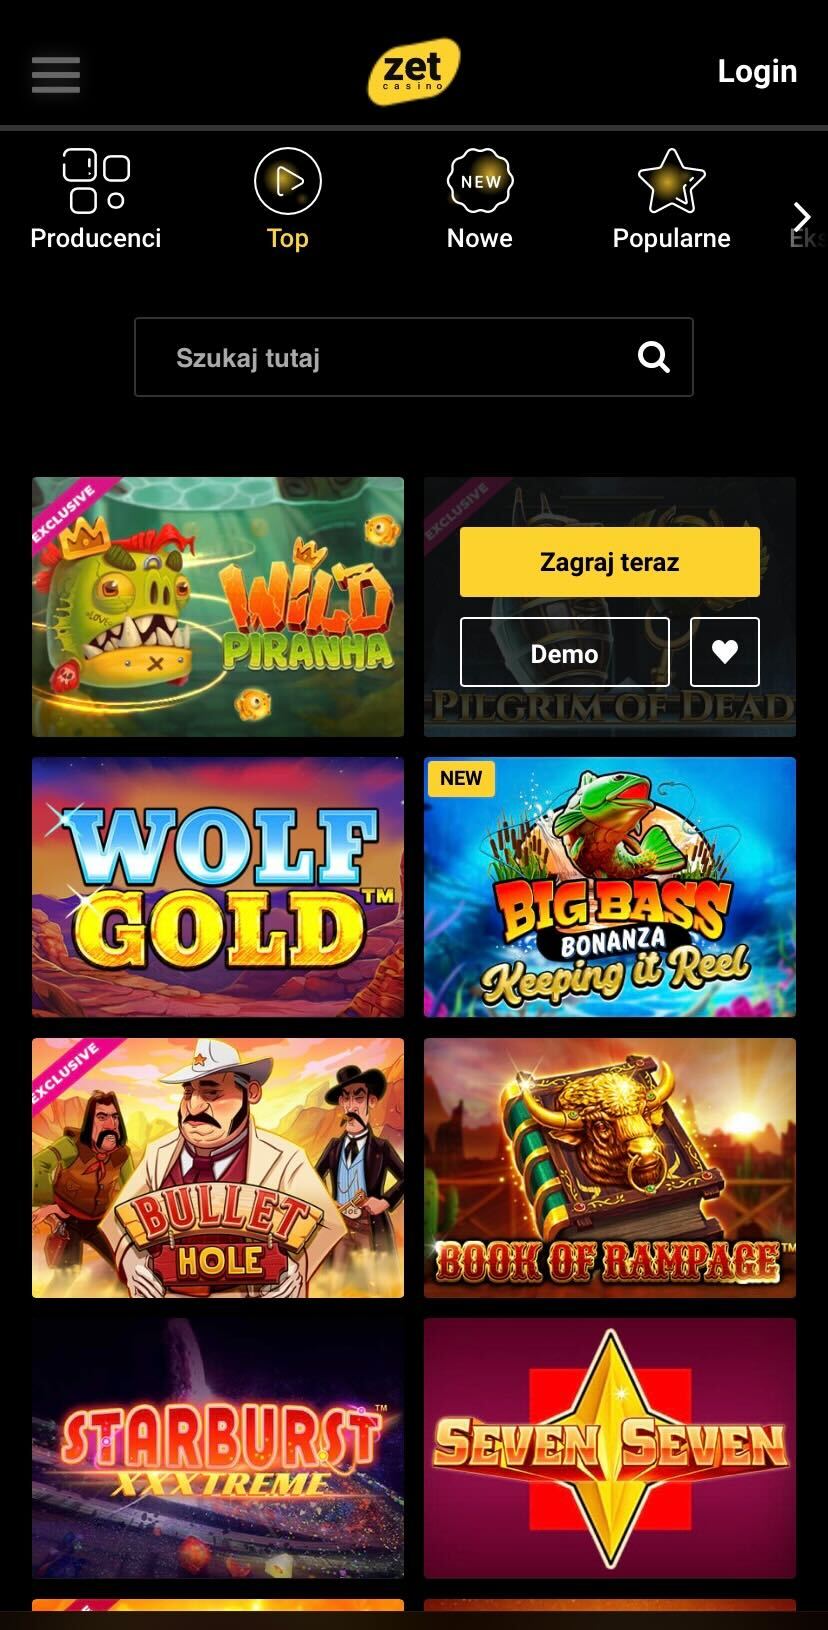 Zet Casino Mobile Review